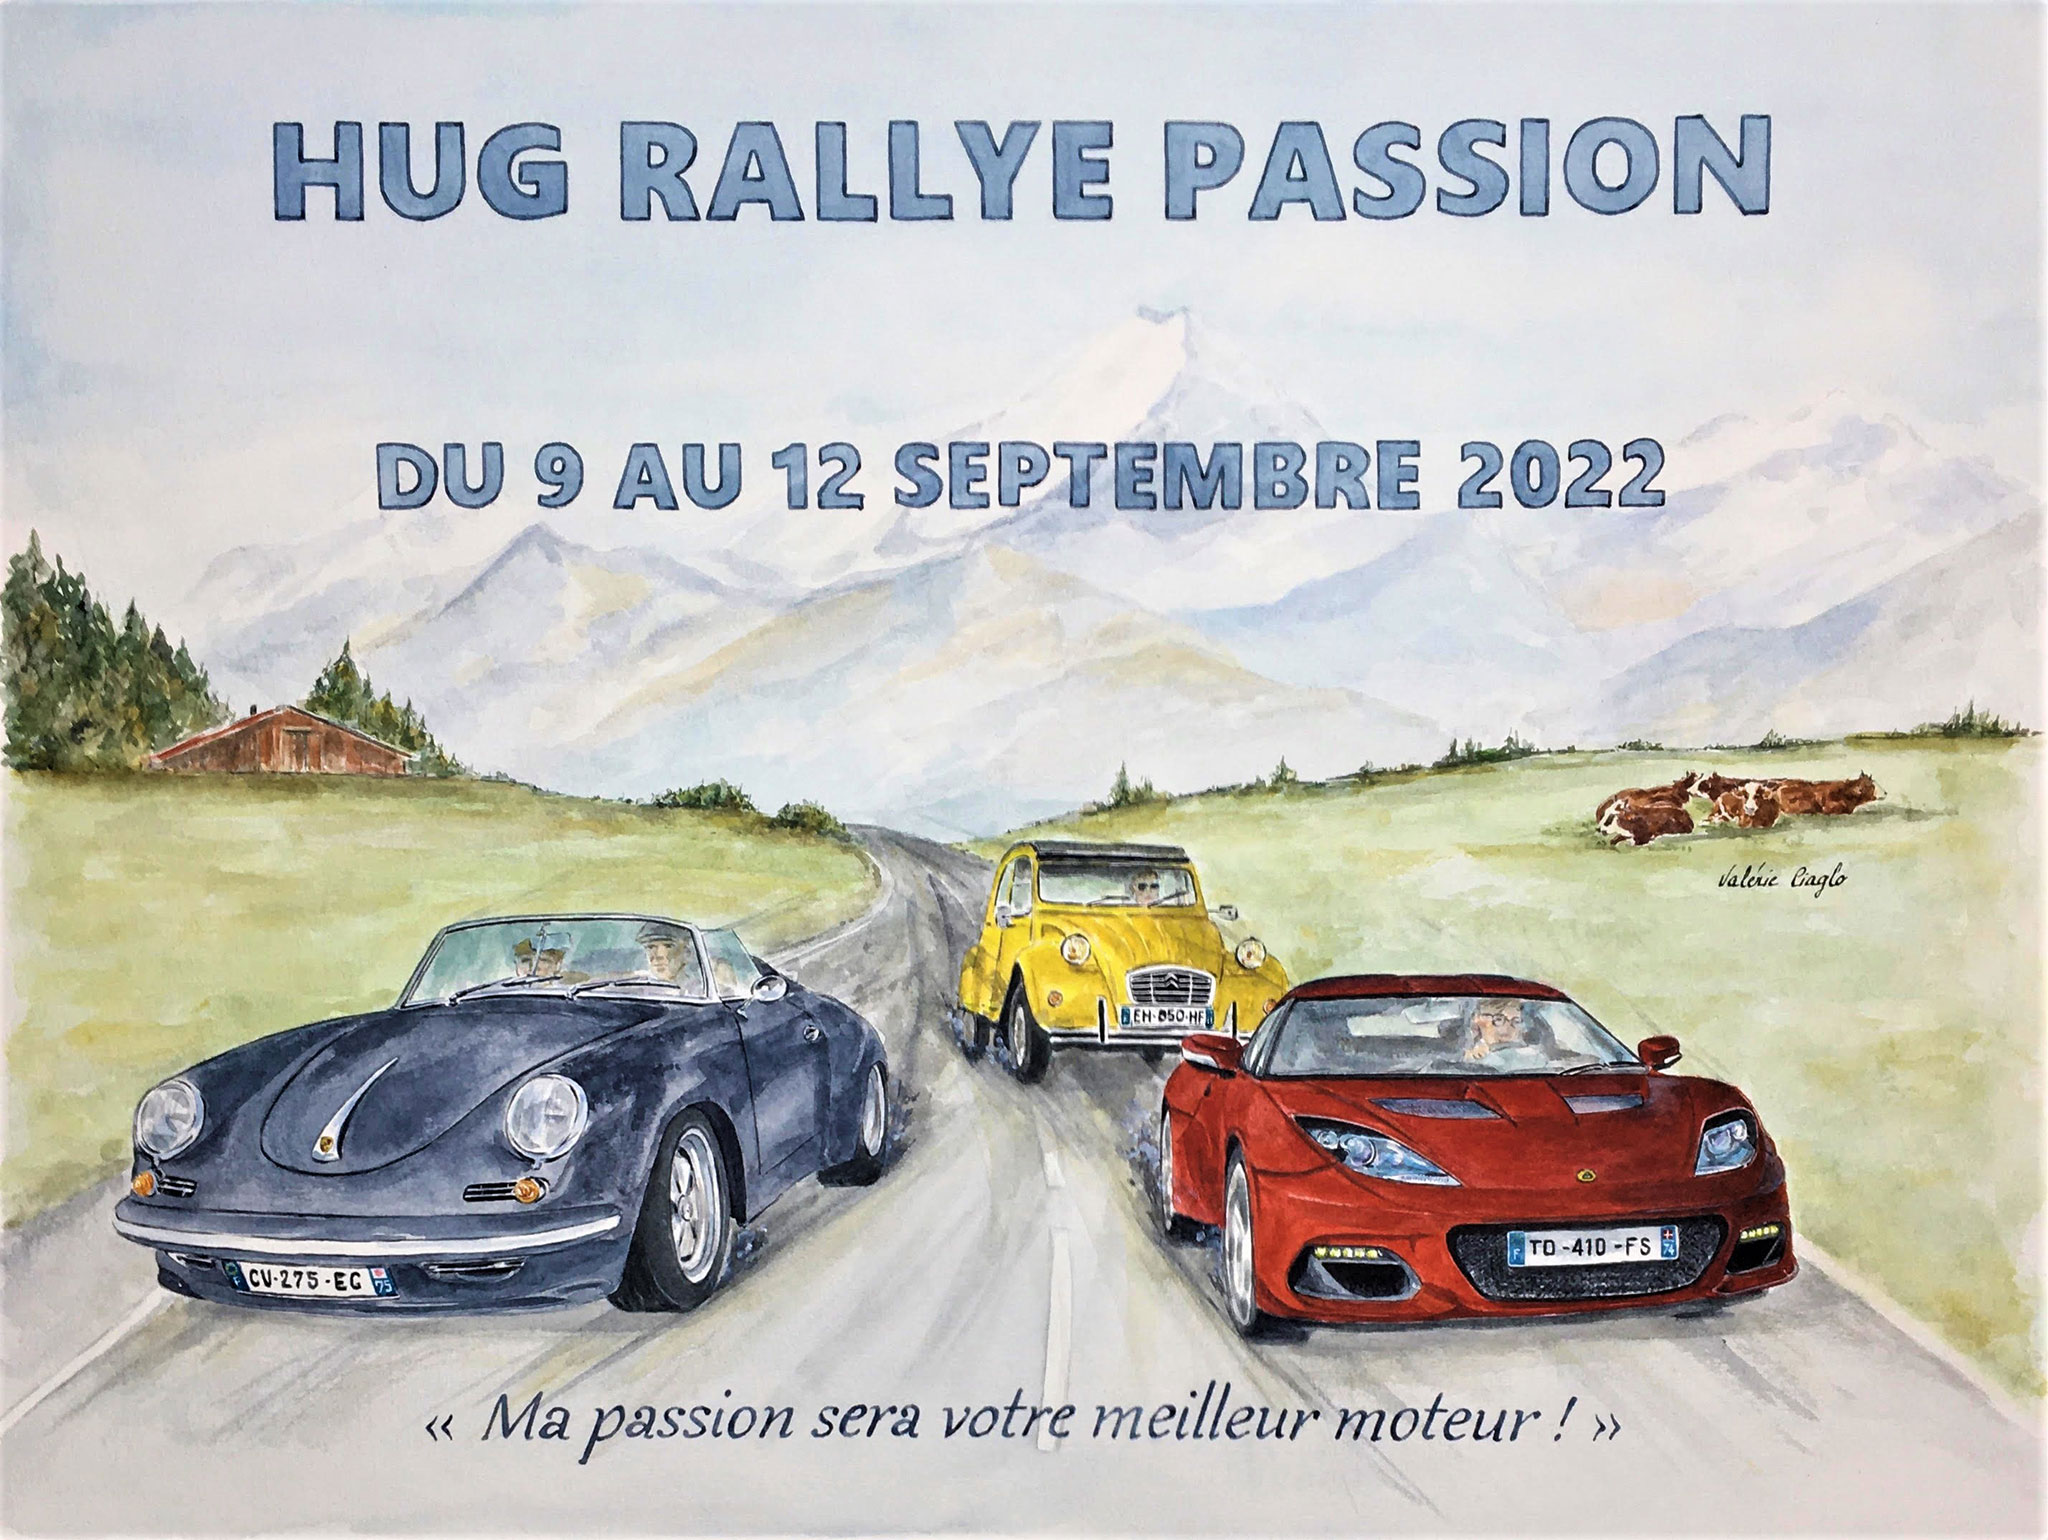 Hug Rallye Passion - du 9 au 12 septembre 2022.